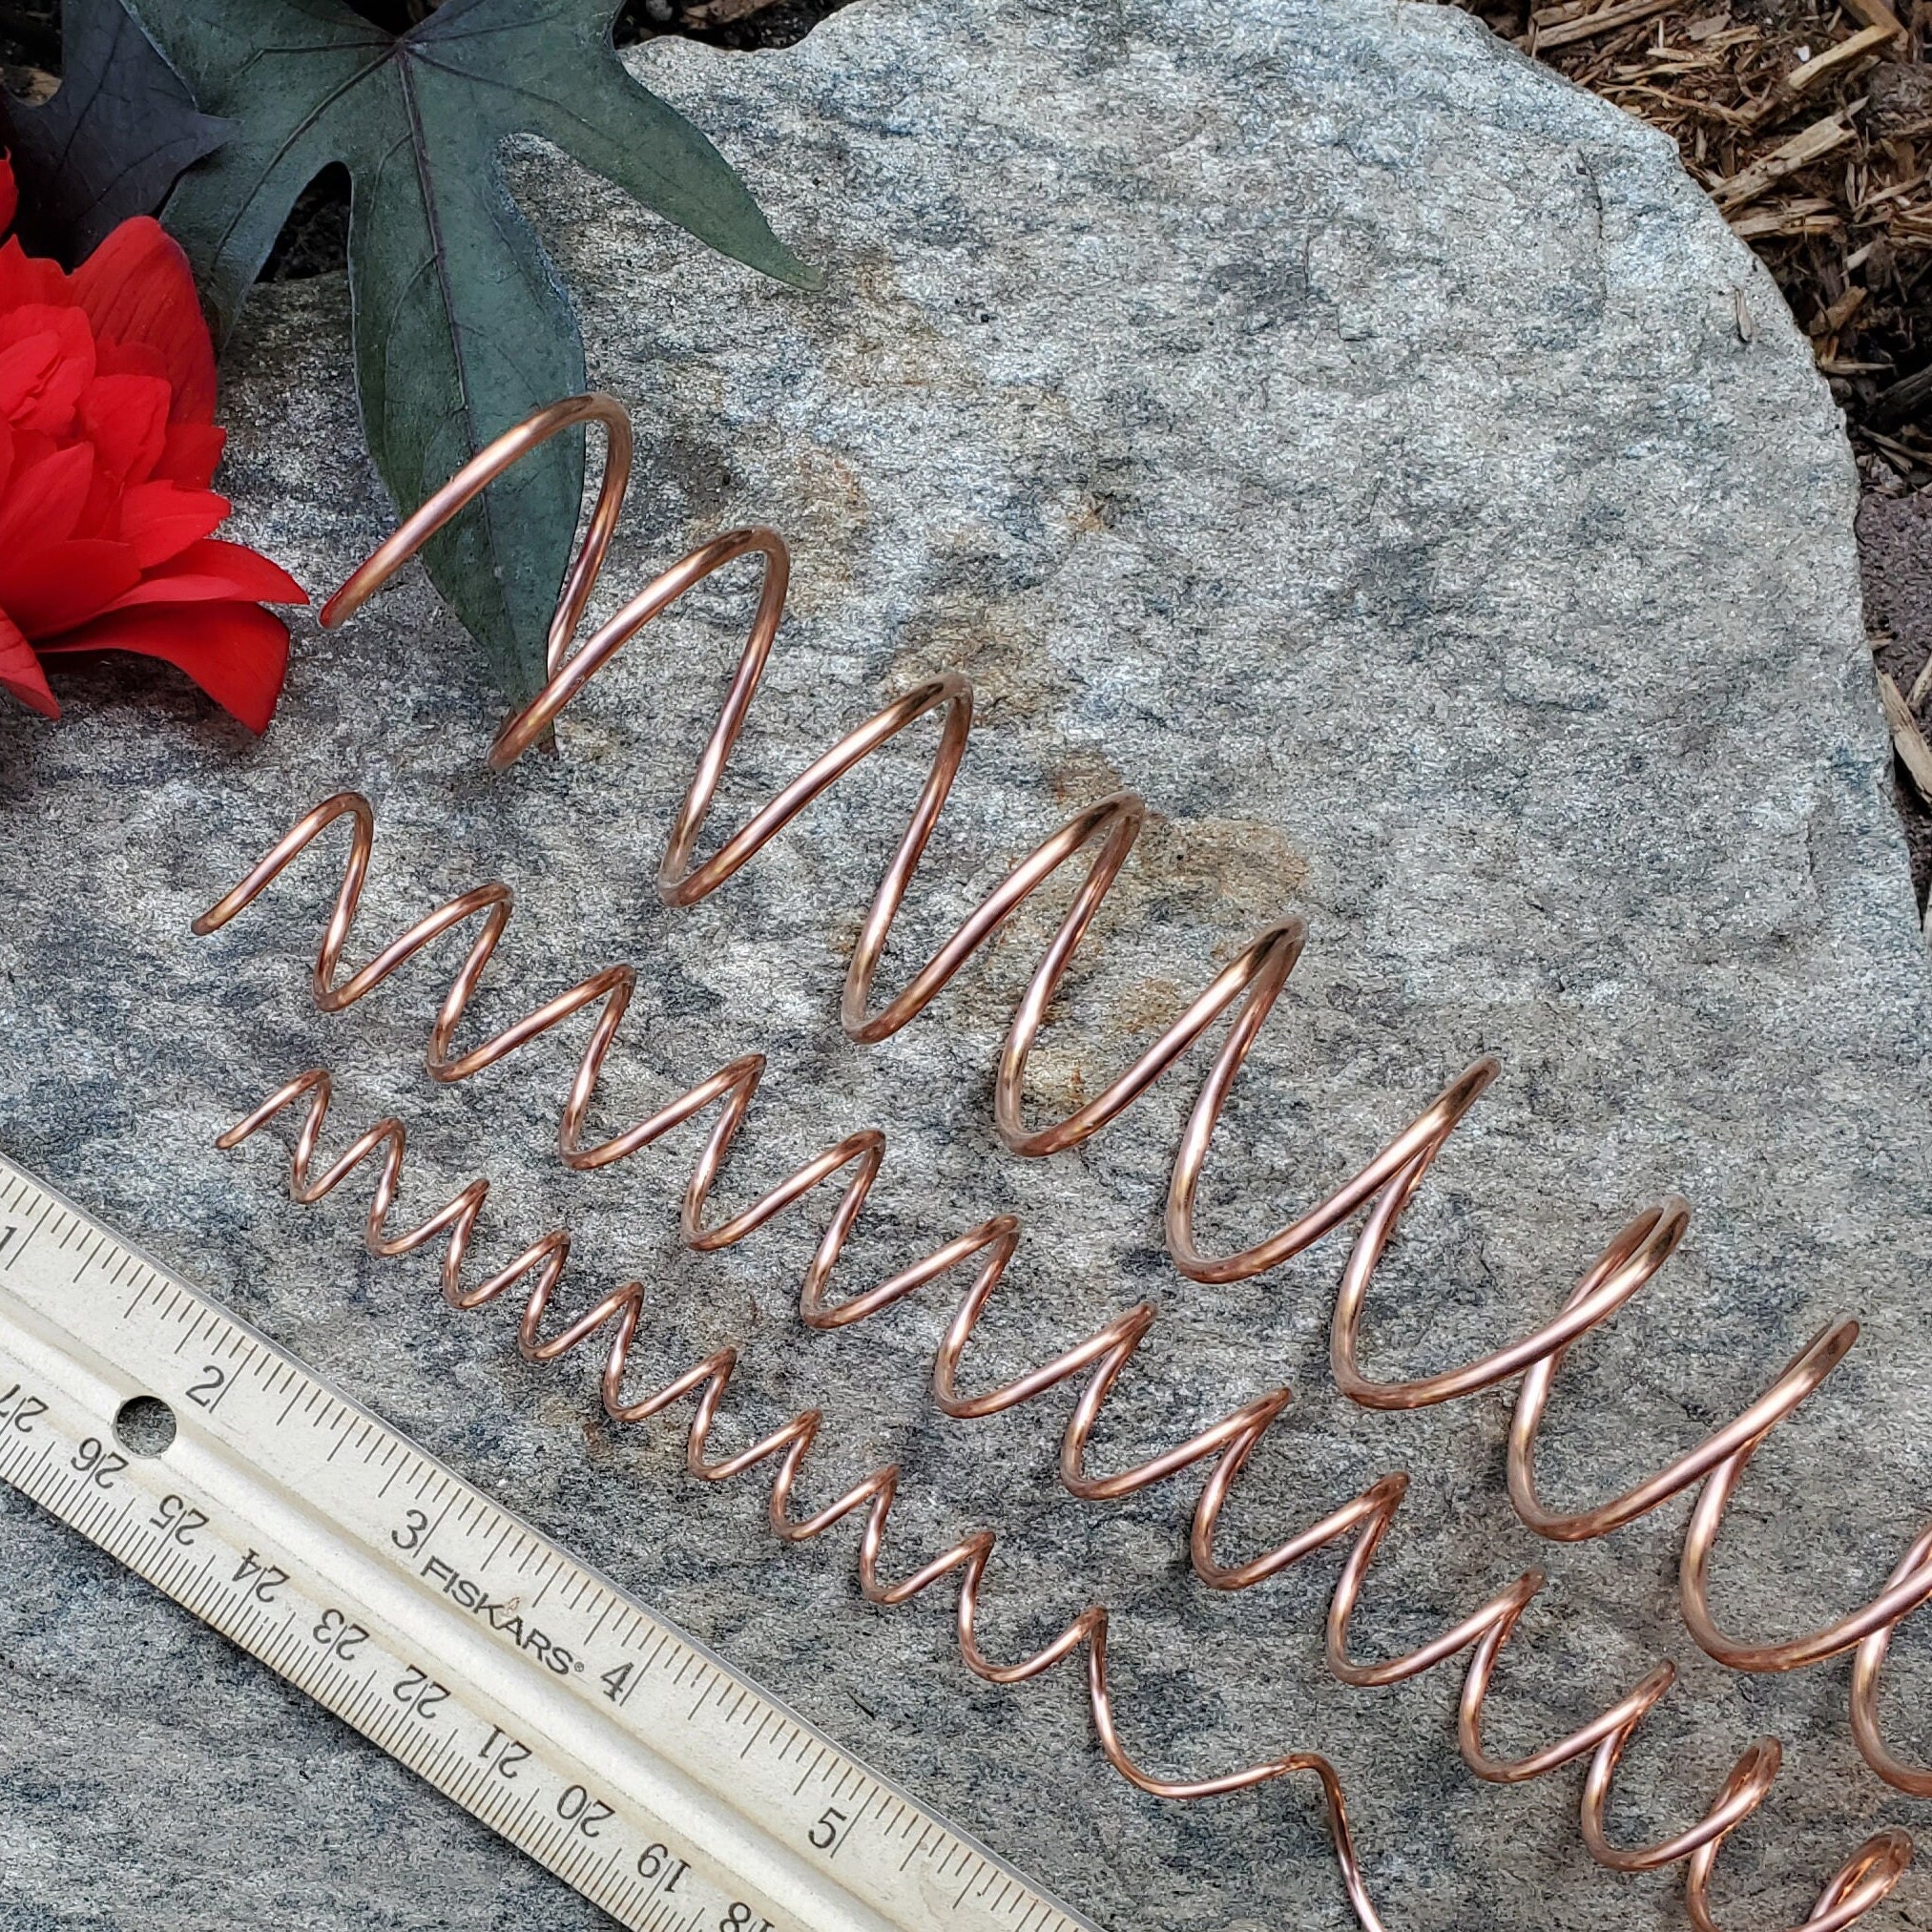 Electro Culture Rods for Plants, Copper Electroculture Garden